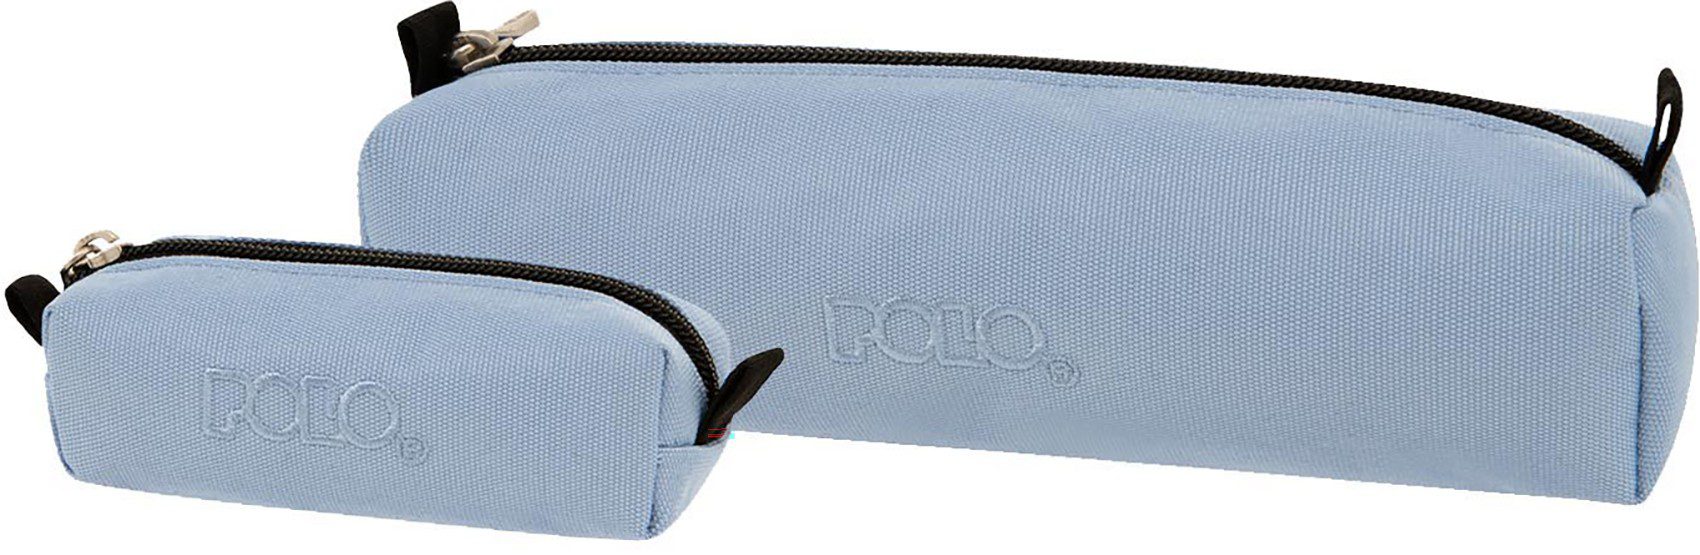 Polo Κασετινα Wallet Cord Γαλαζιο 2023